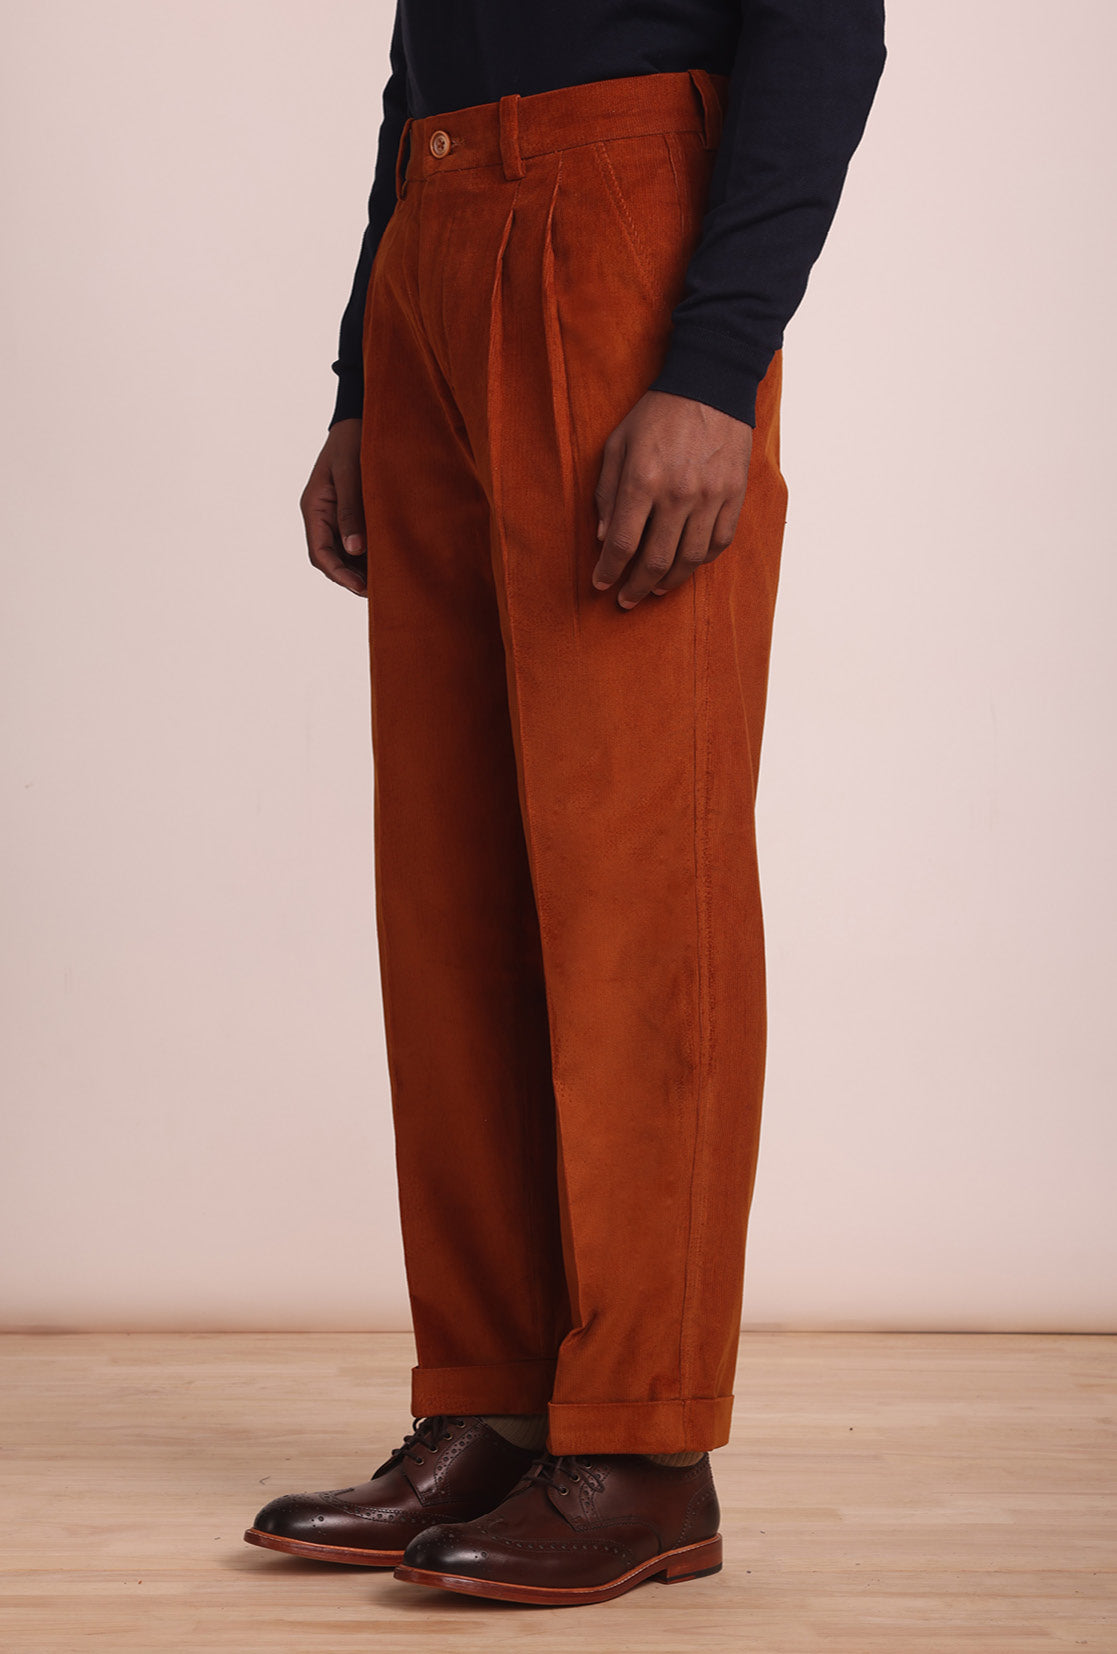 Corduroy Trousers | Mens Corduroy Trousers and Pants UK - Tweed Jackets UK